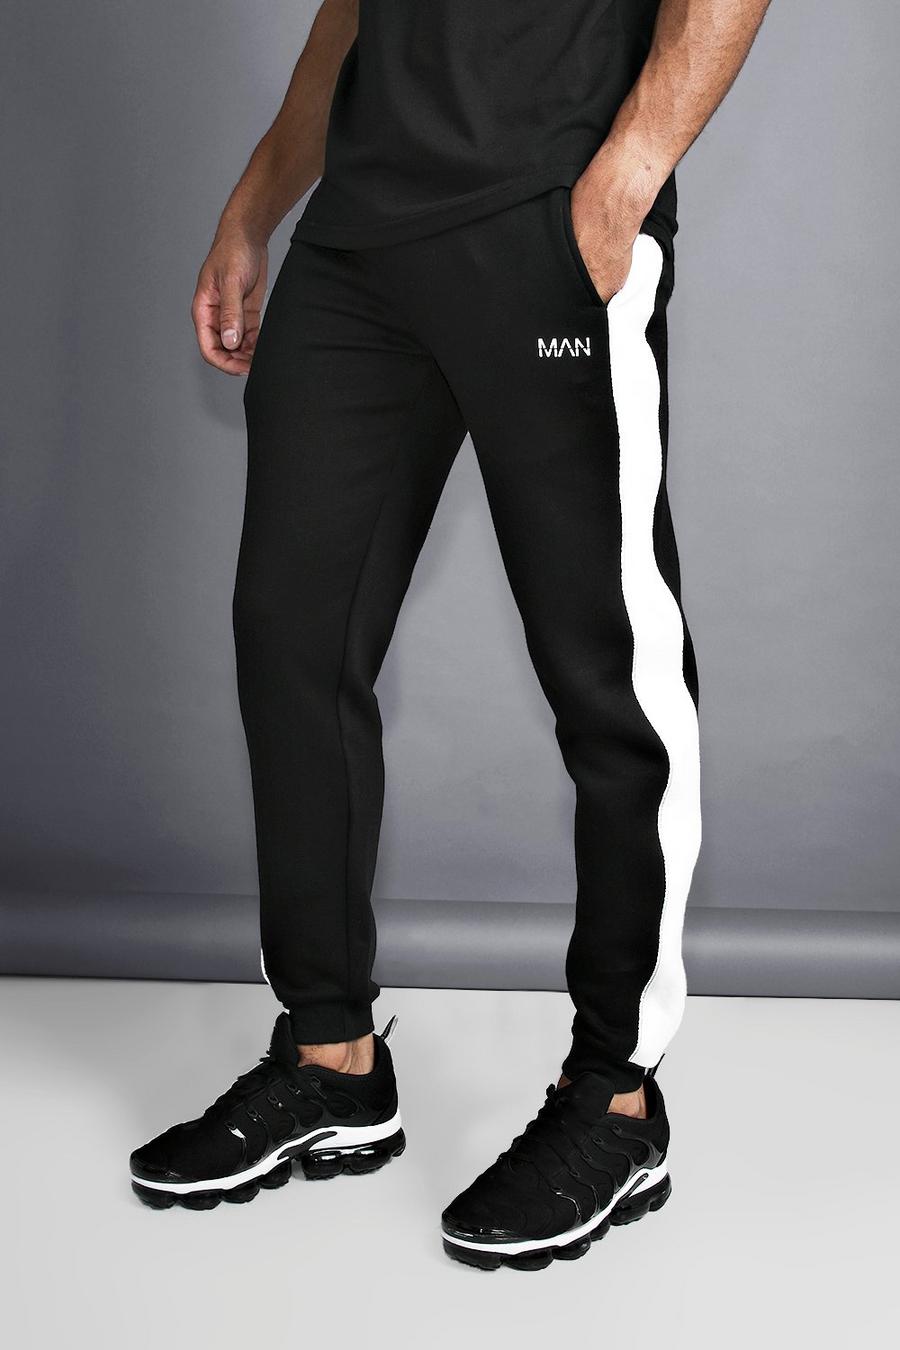 Pantaloni tuta con logo Original MAN e profili riflettenti image number 1